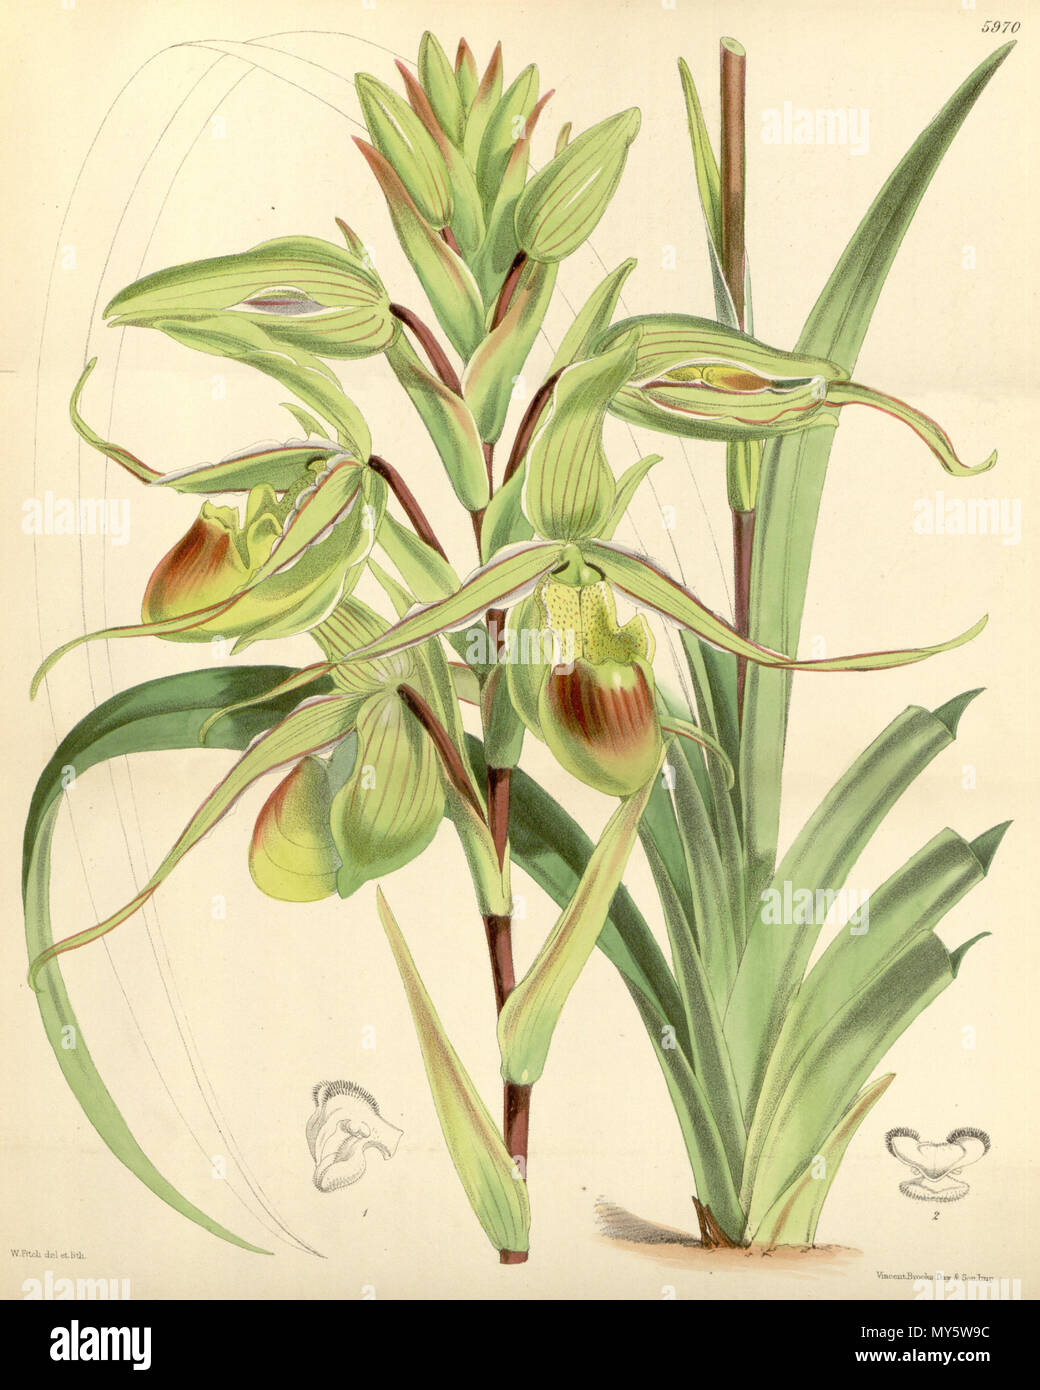 . Illustration of Phragmipedium longifolium (as syn. Cypripedium longifolium) . 1872. Walter Hood Fitch (1817-1892) del. et lith. Description by Joseph Dalton Hooker (1817—1911) 420 Phragmipedium longifolium (as Cypripedium longifolium) - Curtis' 98 (Ser. 3 no. 28) pl. 5970 (1872) Stock Photo